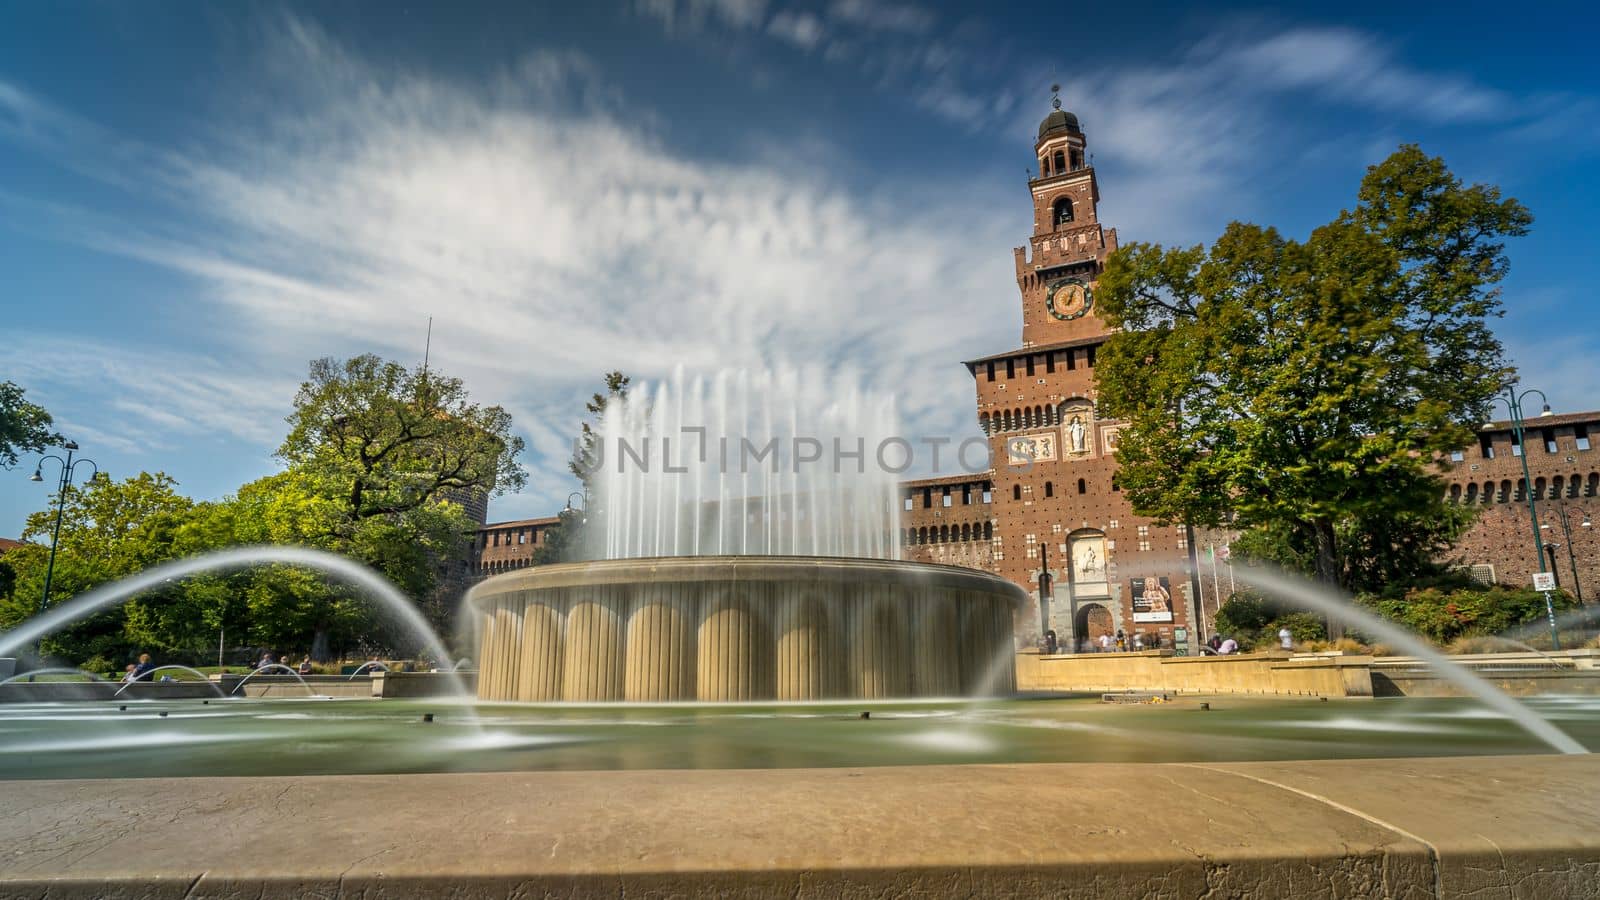 Castello Sforzesco square with fountain in Milan, Italy. Long Exposure.